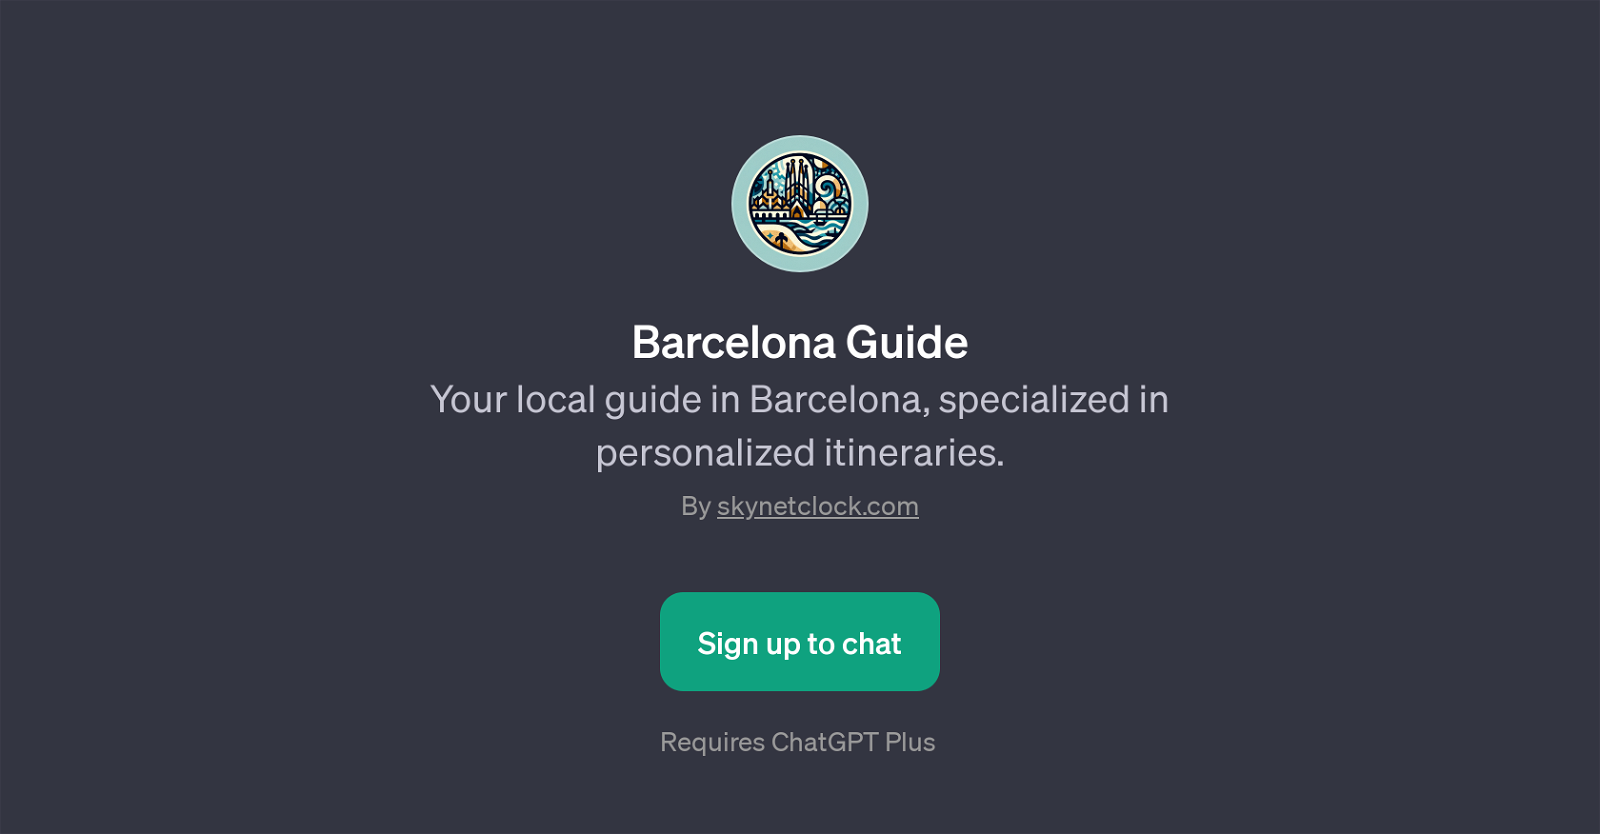 Barcelona Guide website